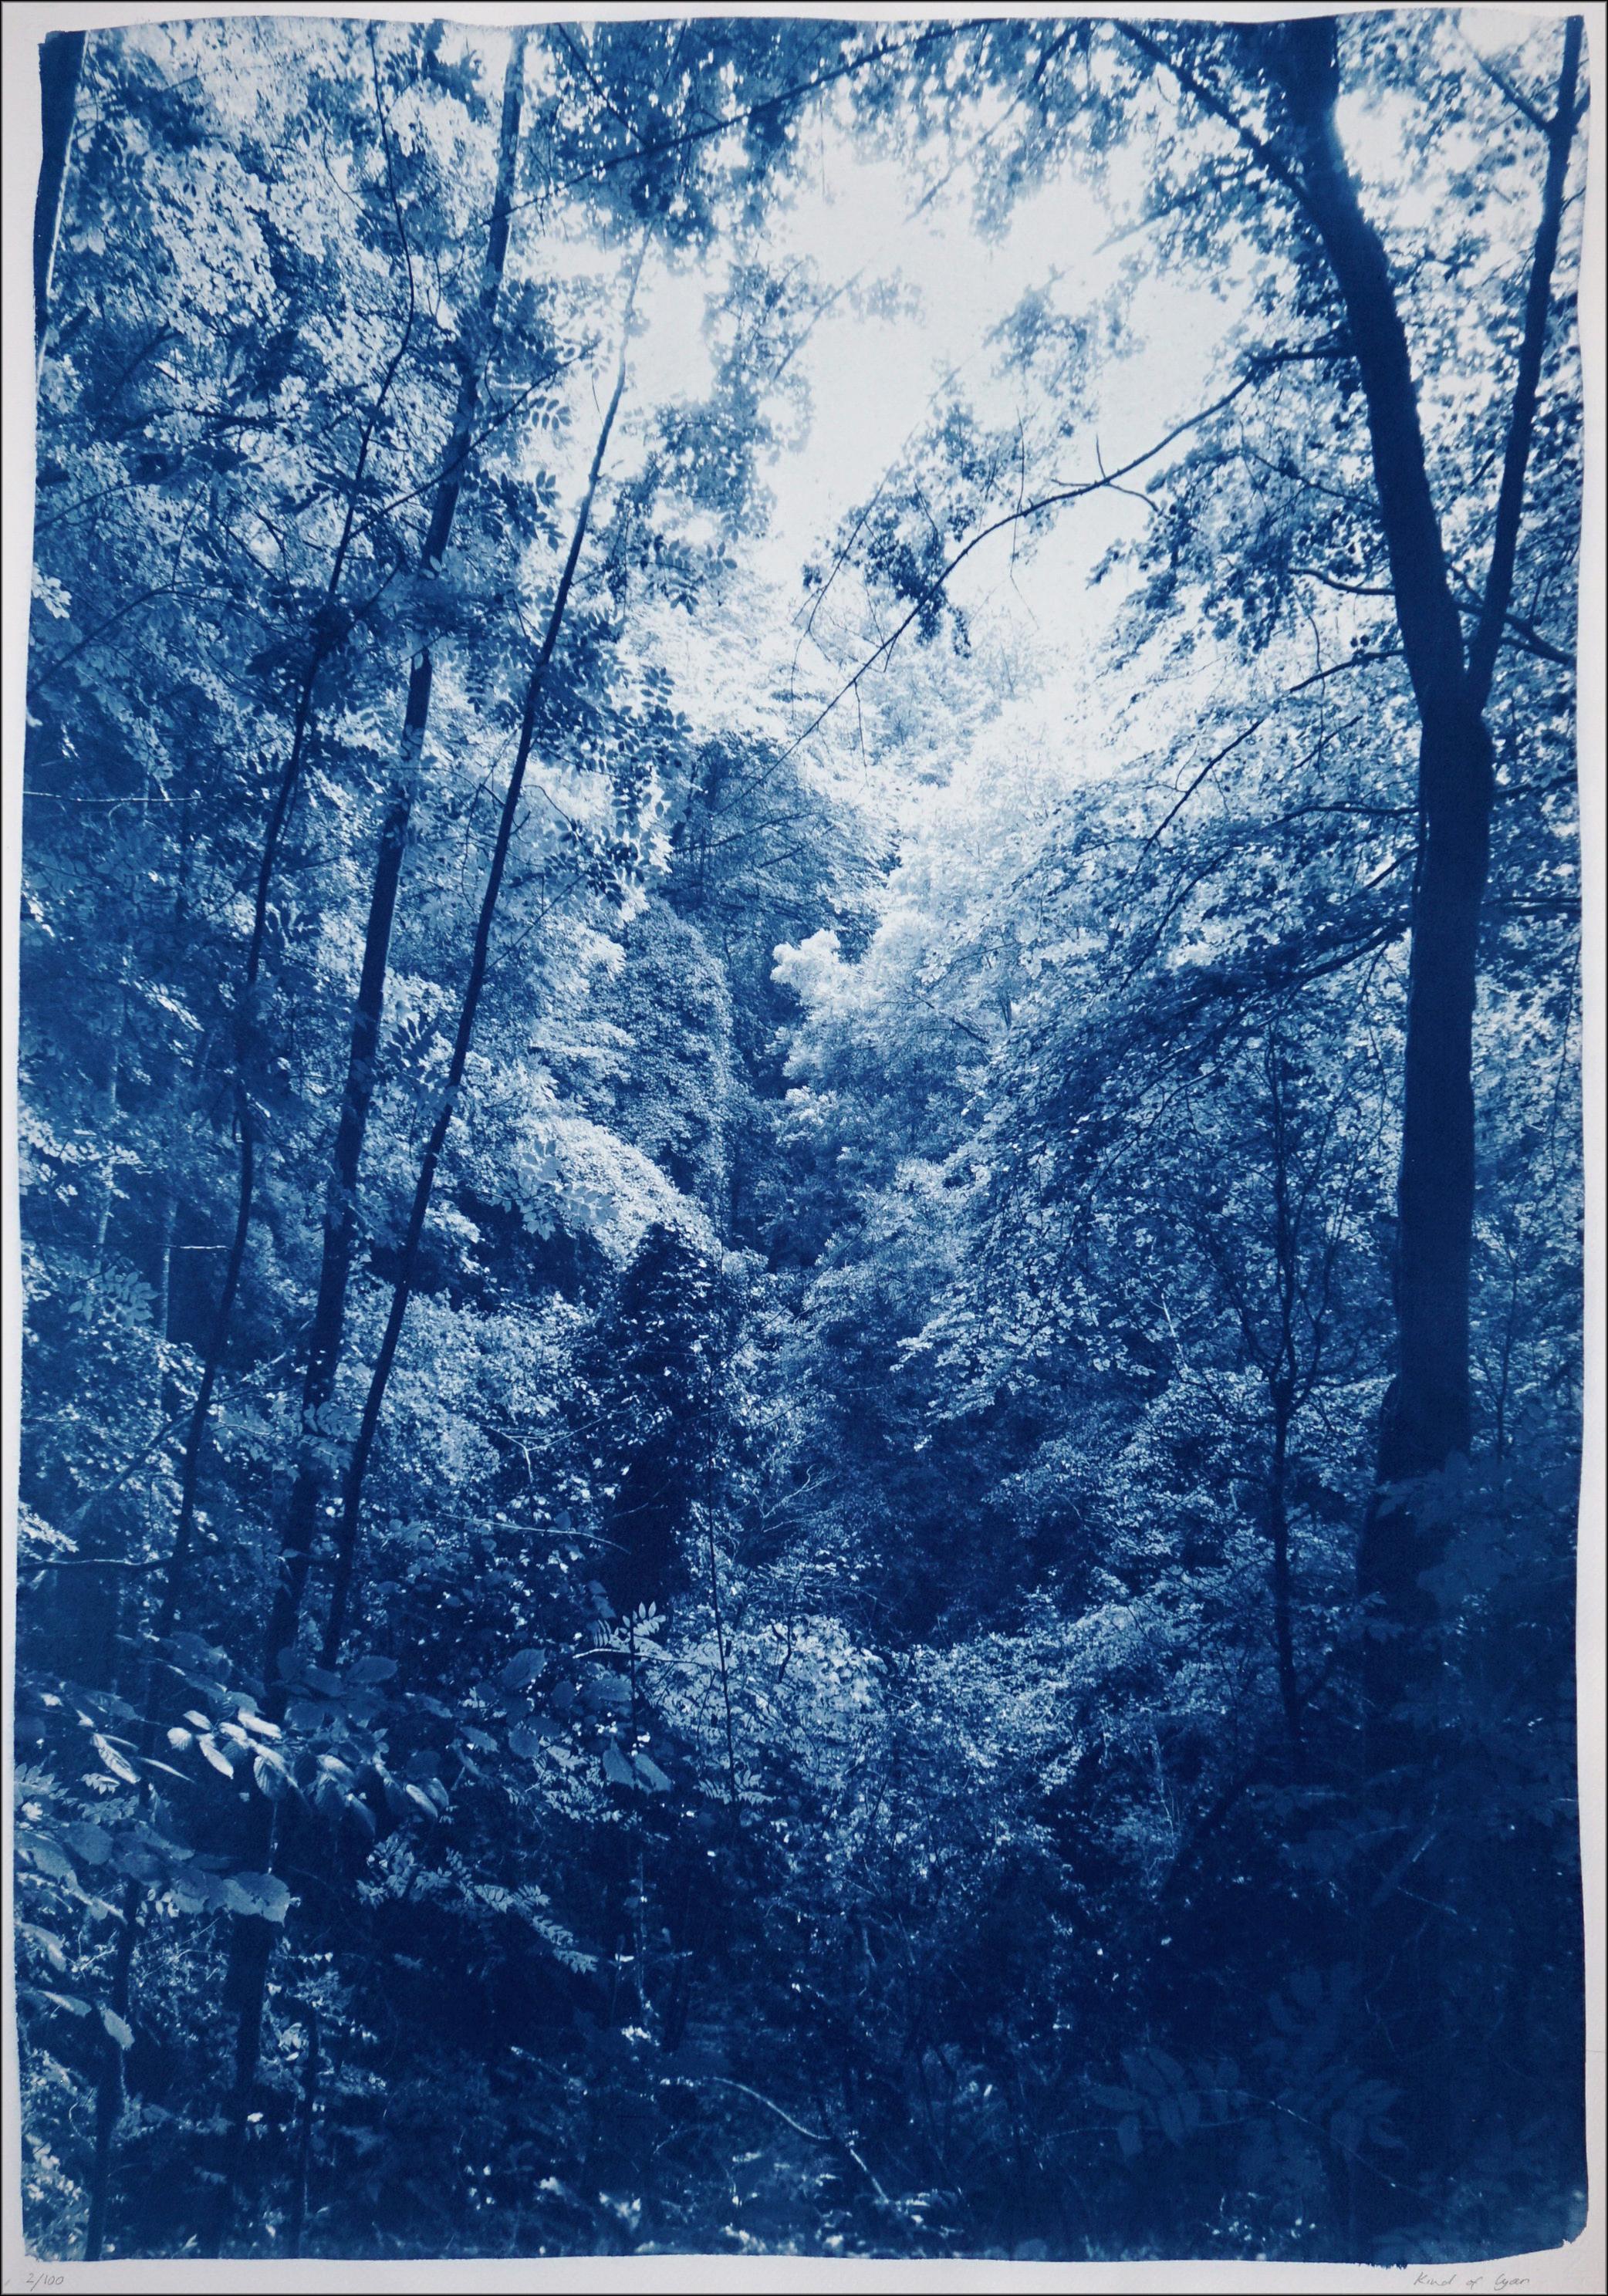 Soft Light in the Woods, Forest Landscape, Blue Tones, Handgefertigter Cyanotype-Druck